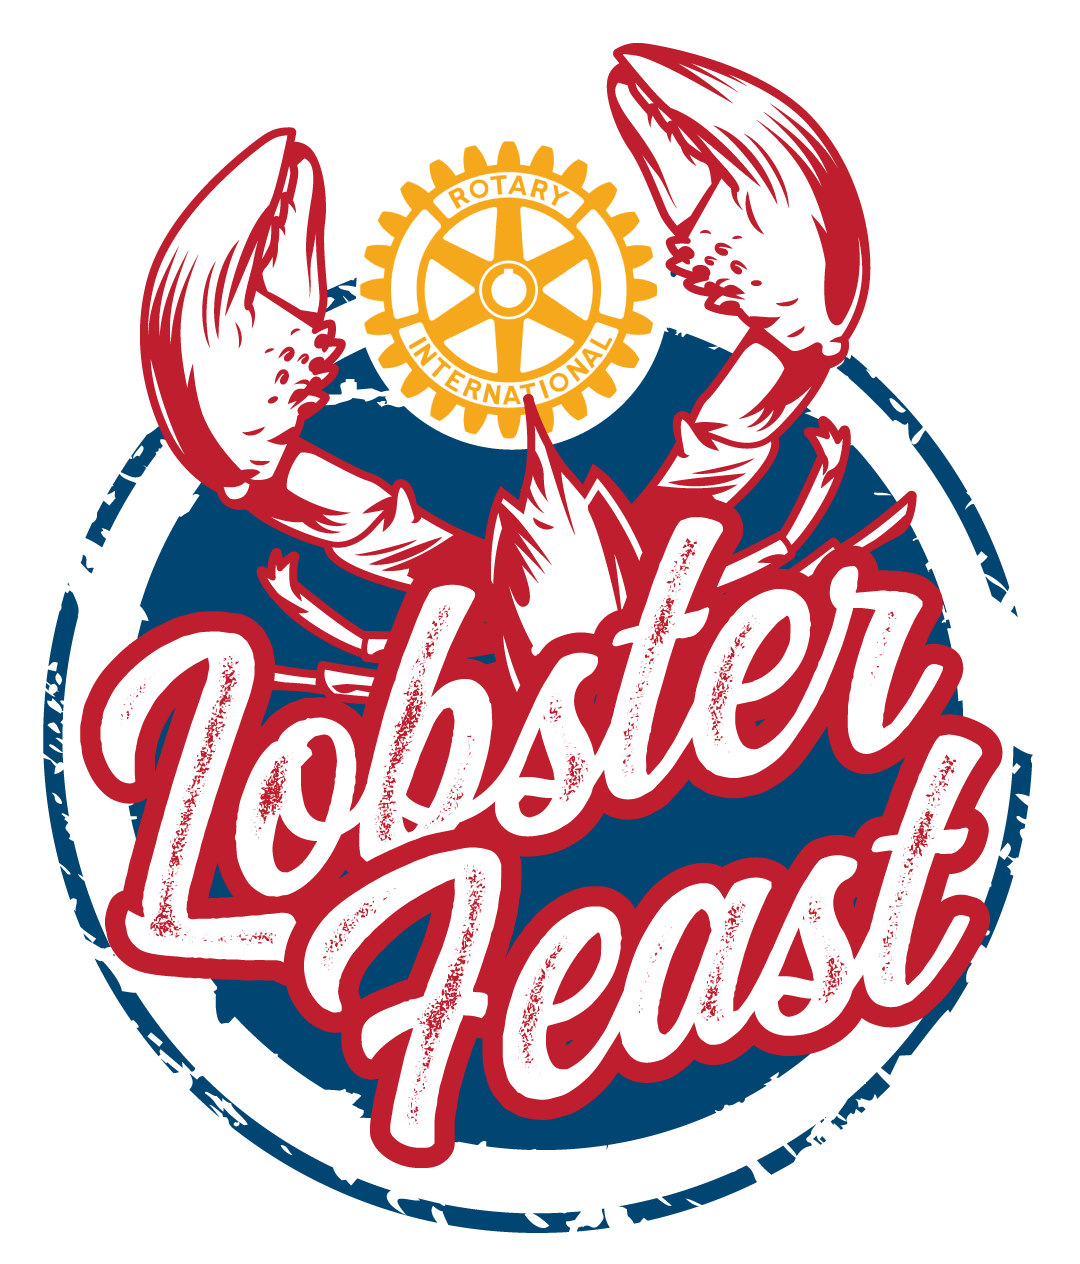 Penticton Rotary Lobster Feast